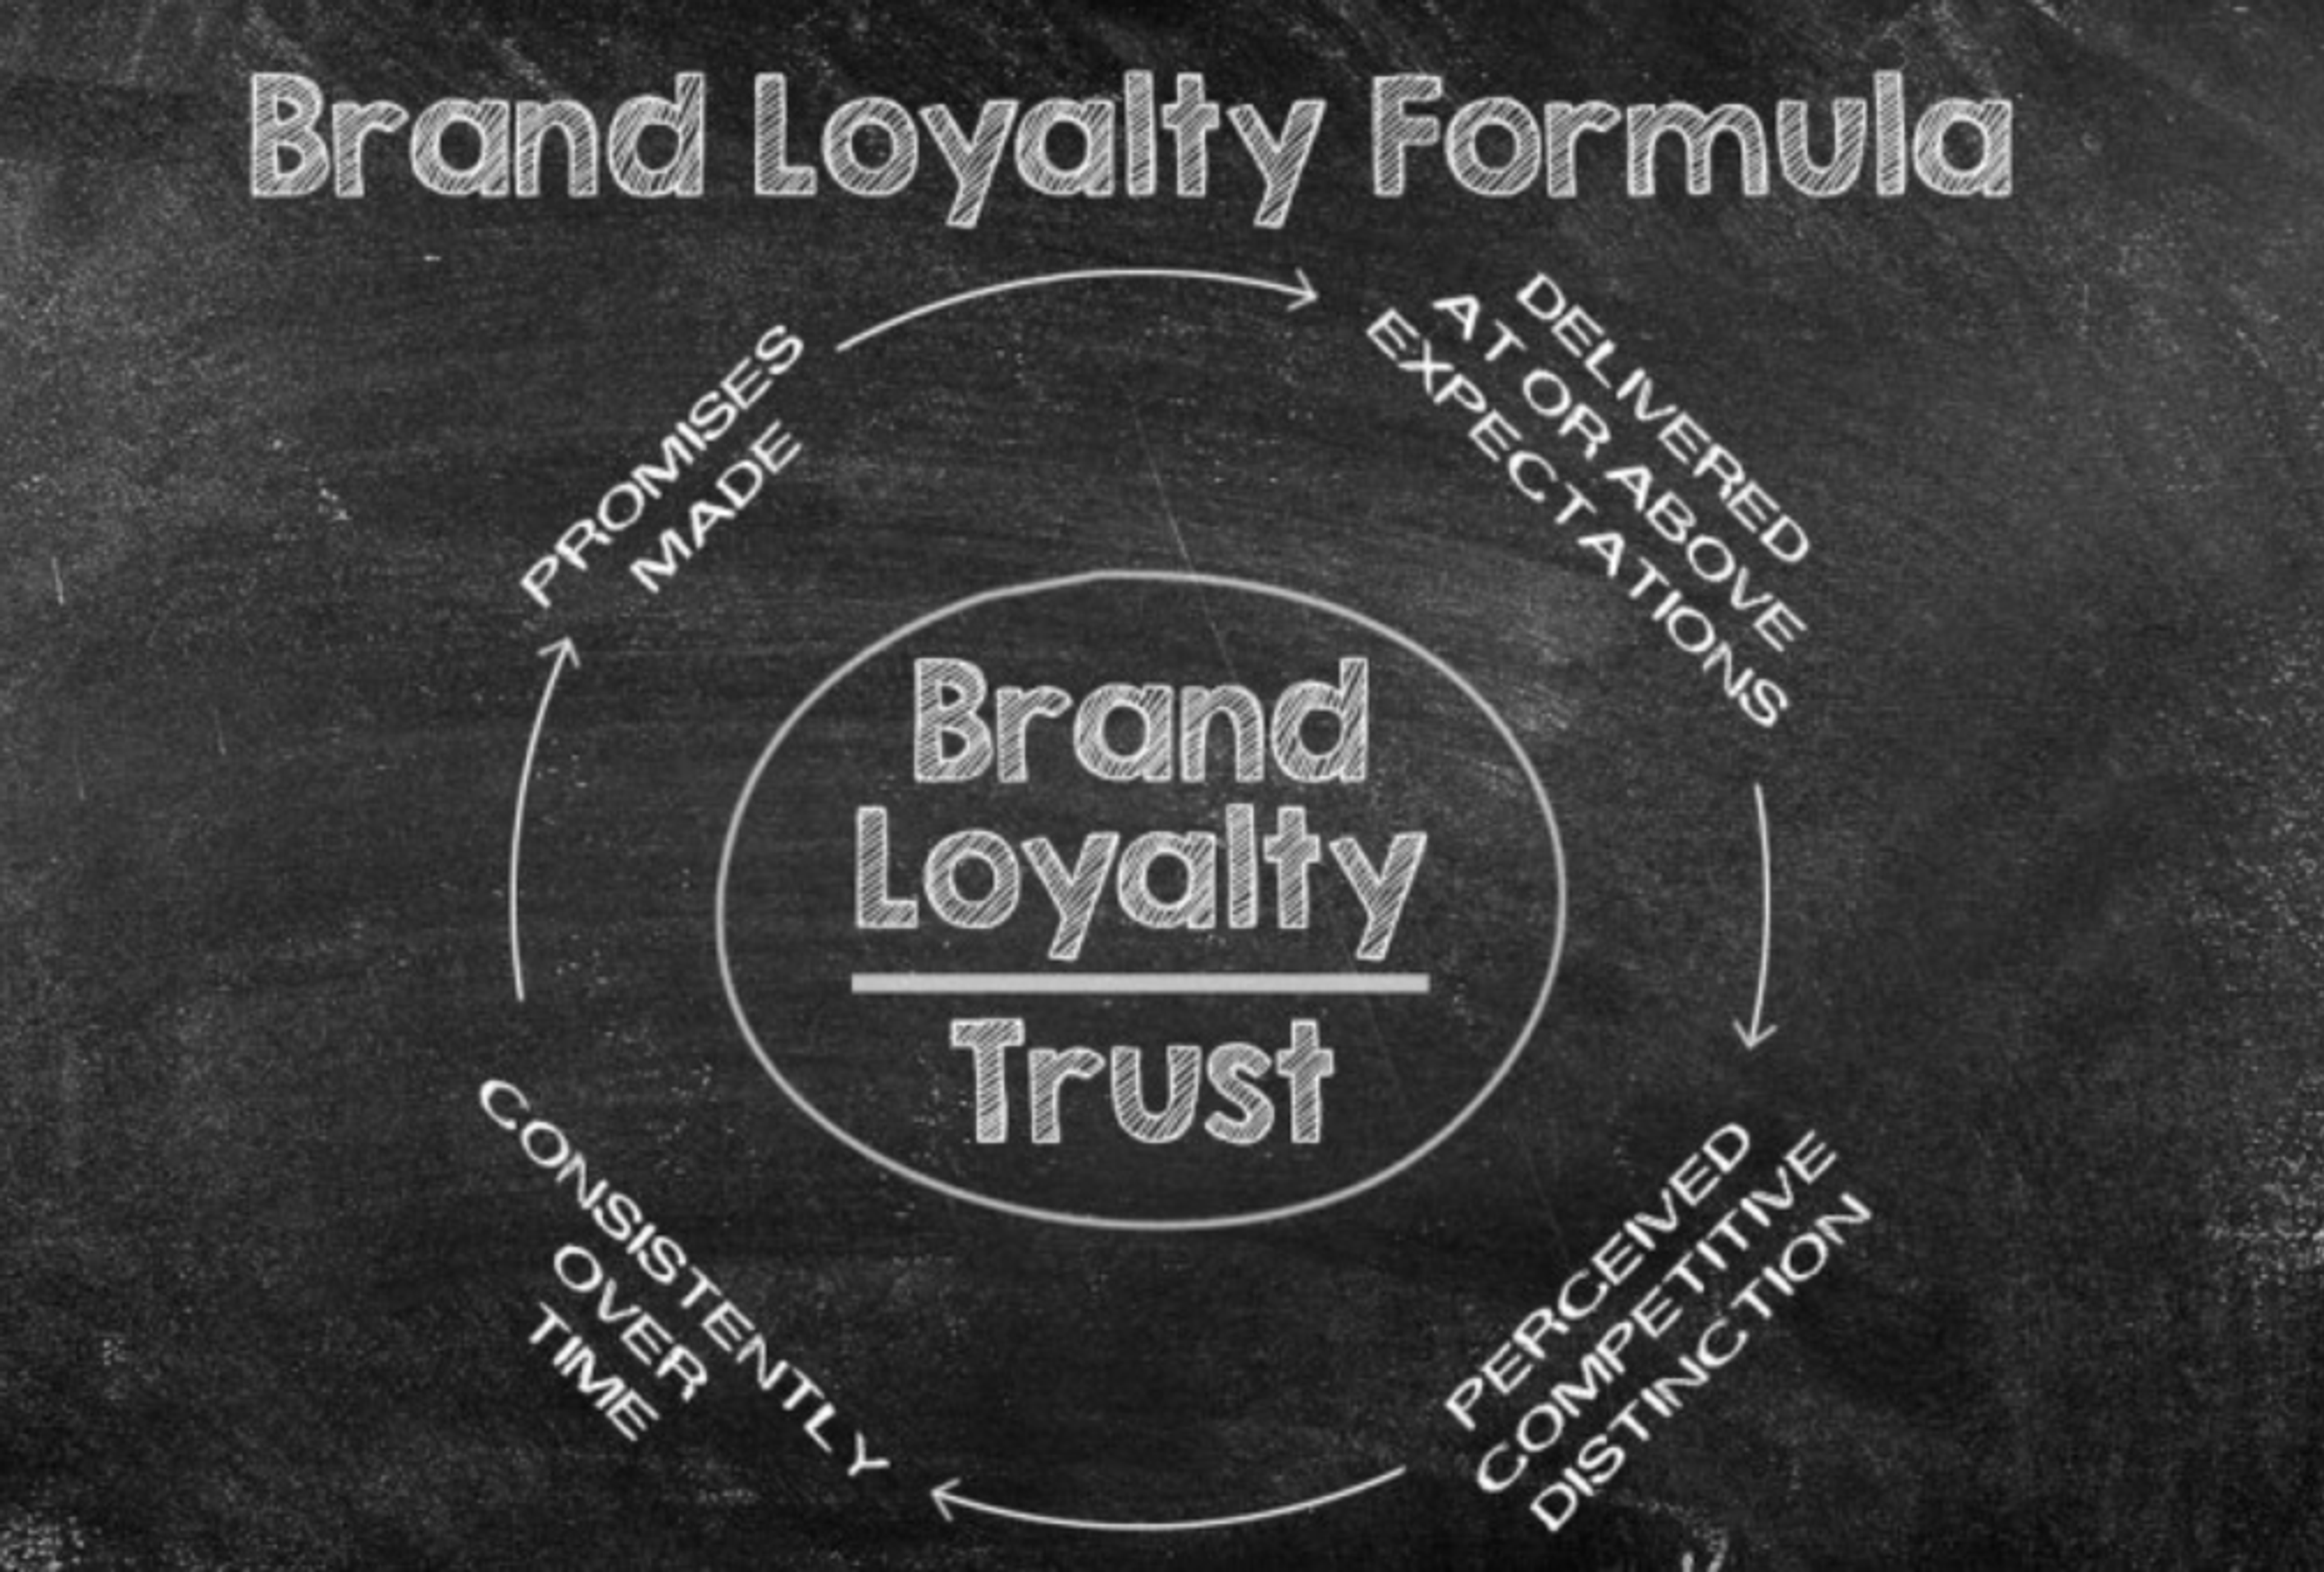 Brand loyalty image via: mission3media.com